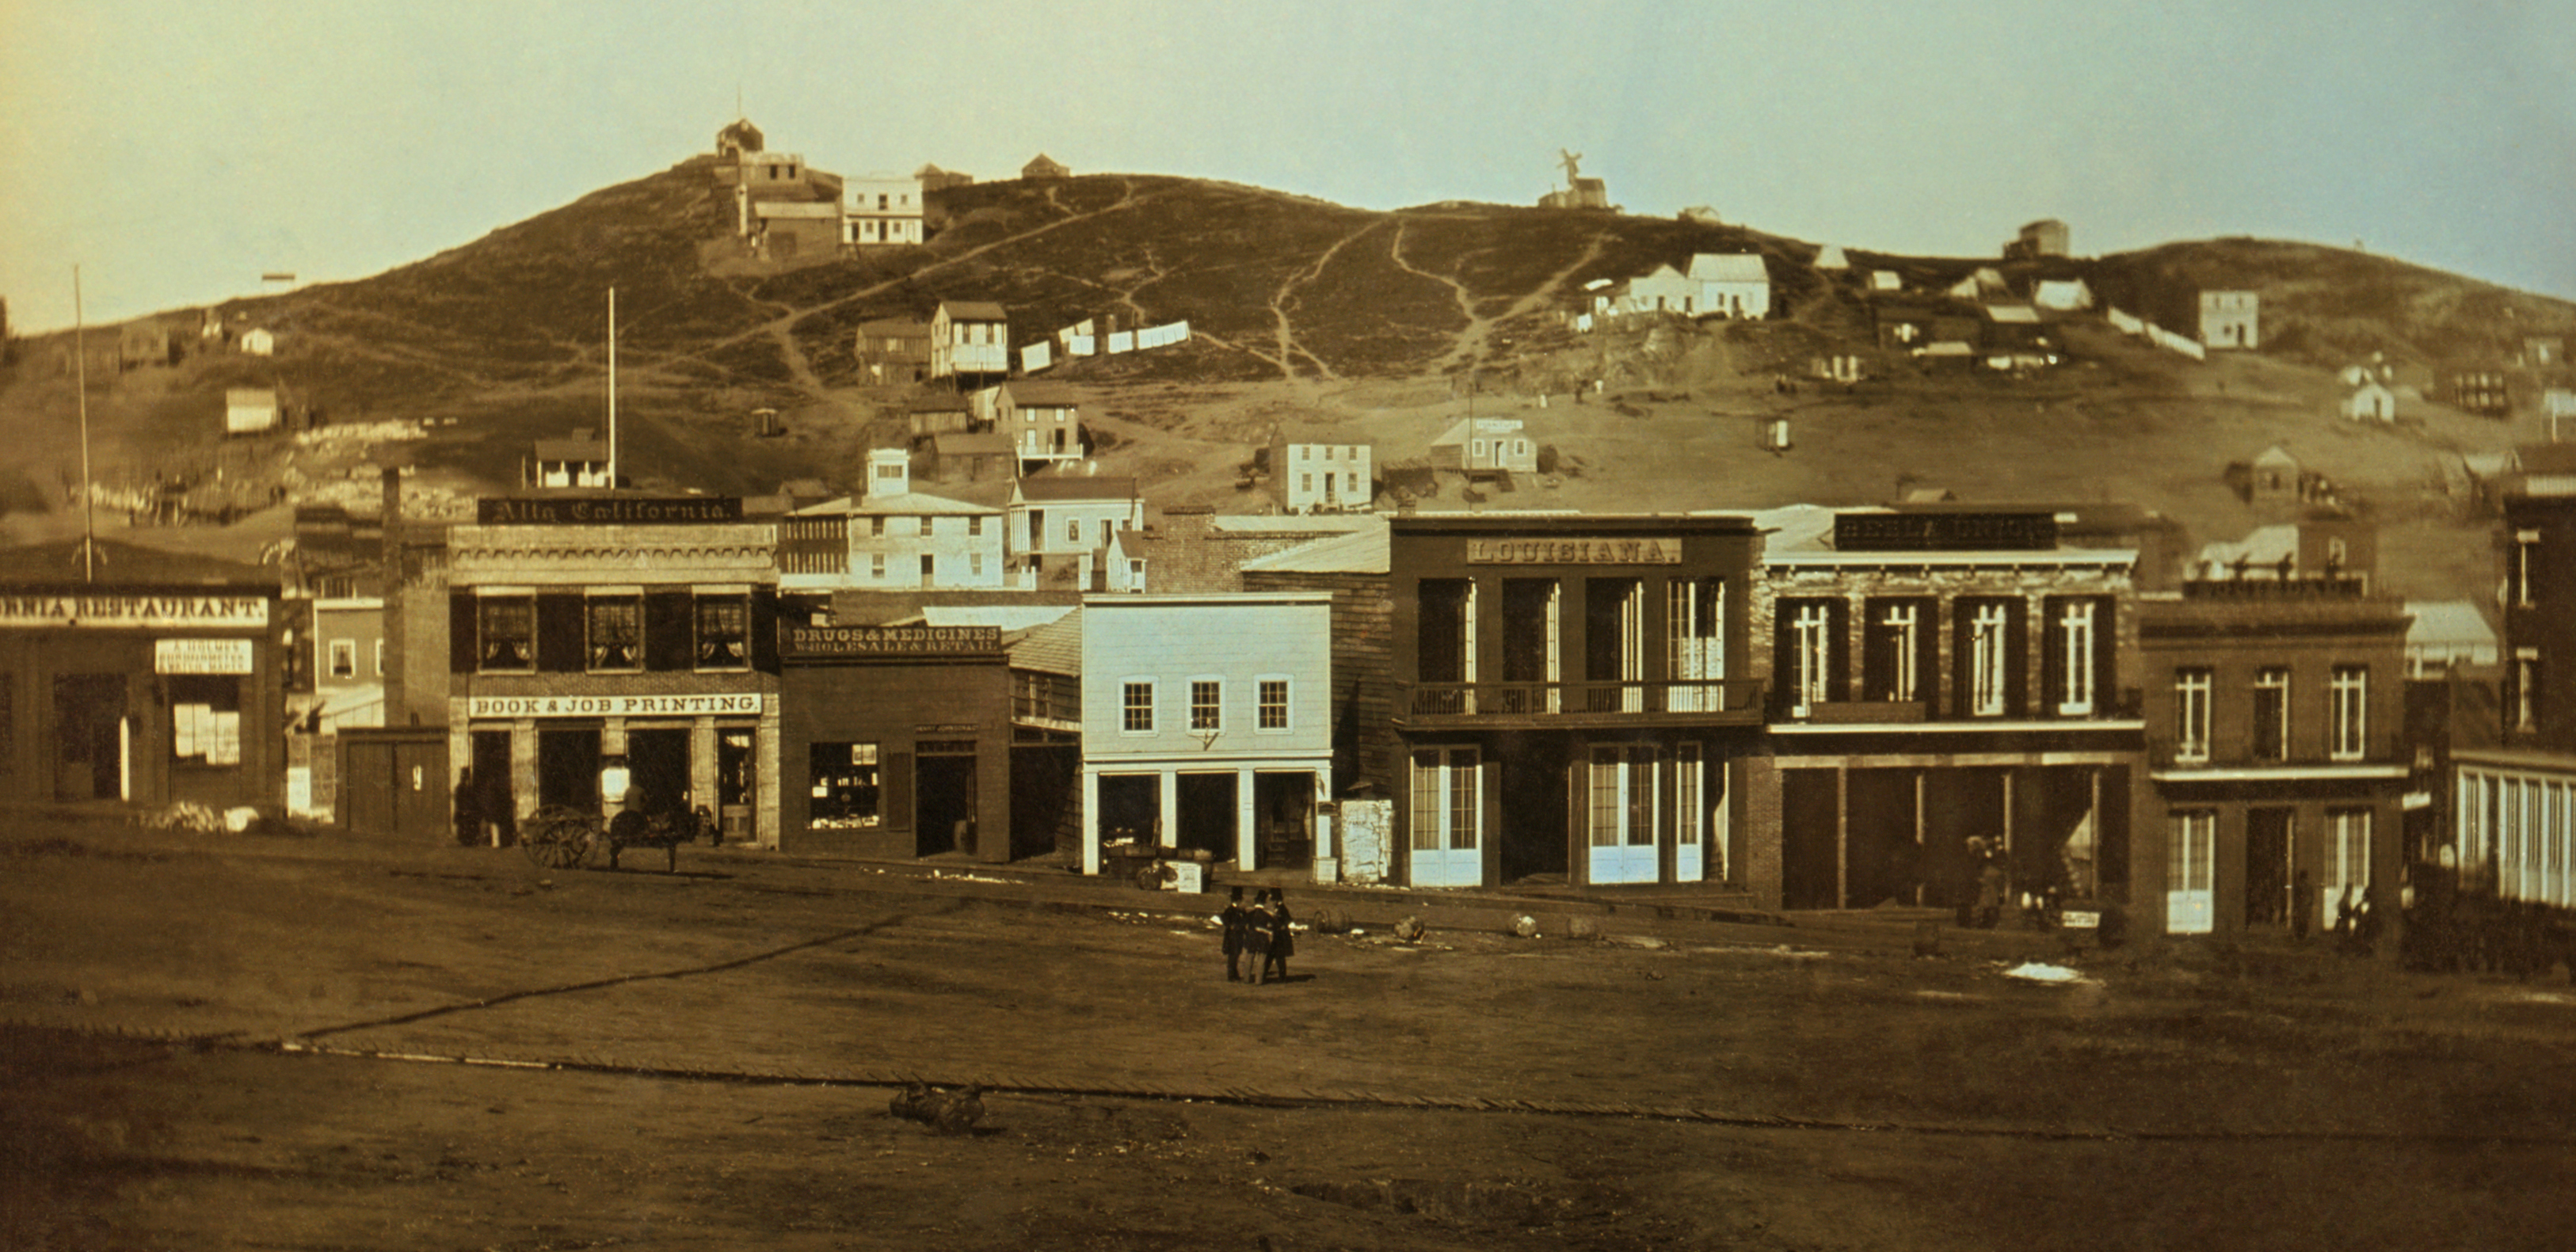 History of San Francisco - Wikipedia